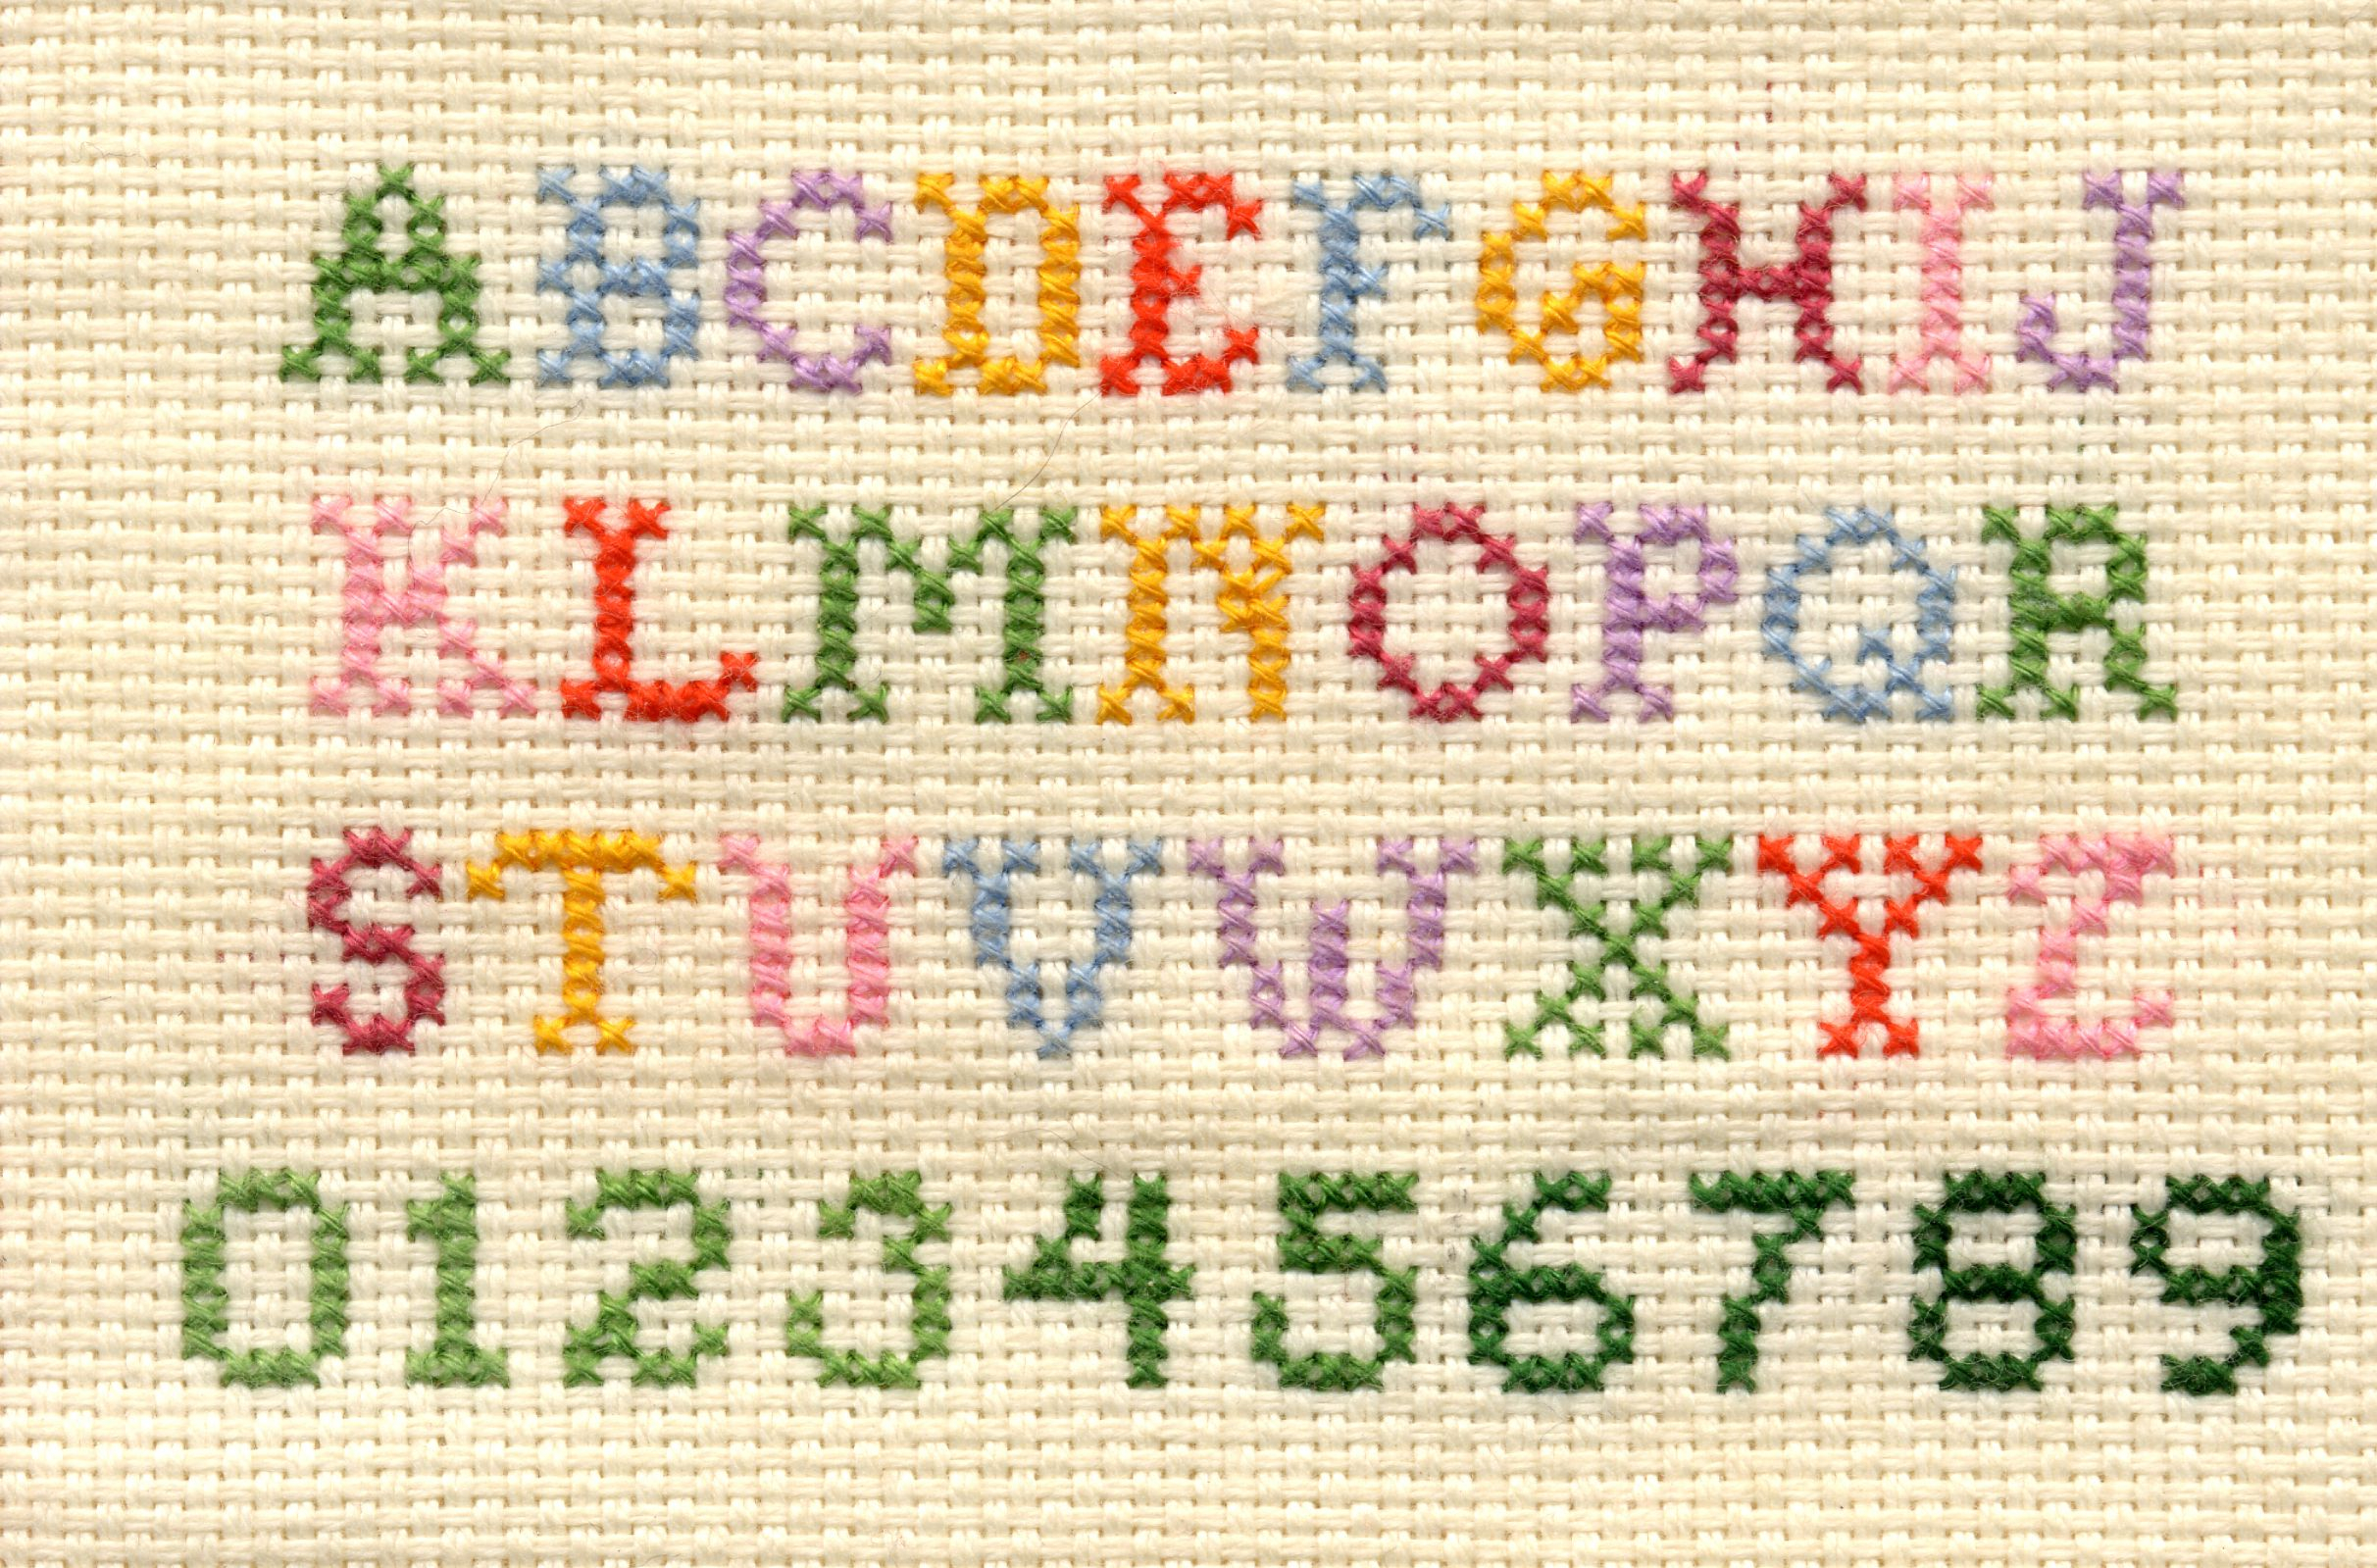 Cross Stitch Embroidery Patterns Free Alphabet Cross Stitch Patterns